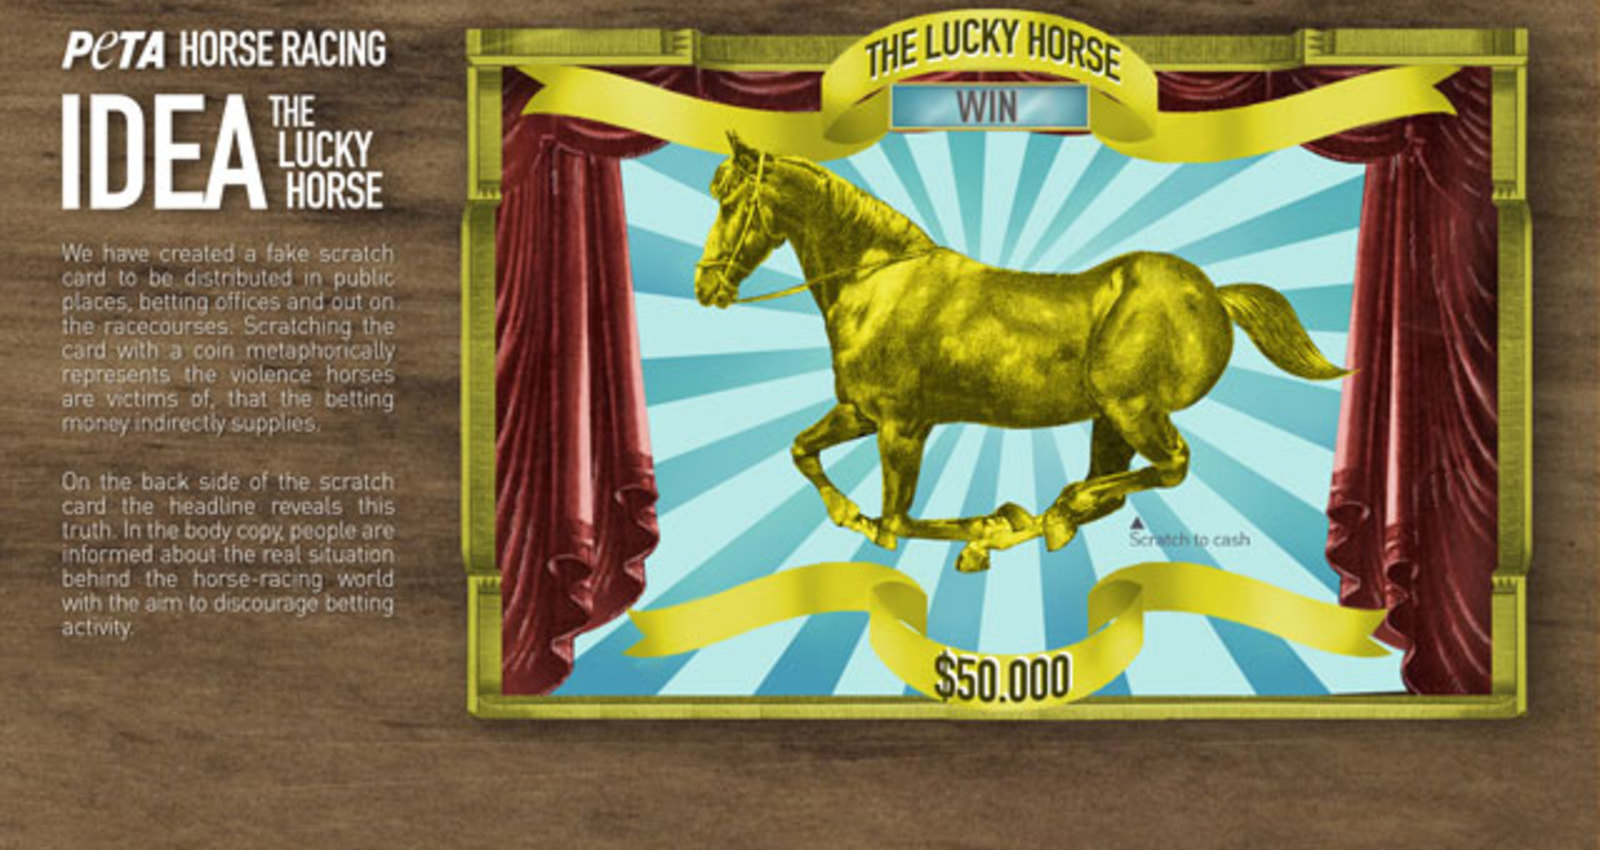 The lucky Horse